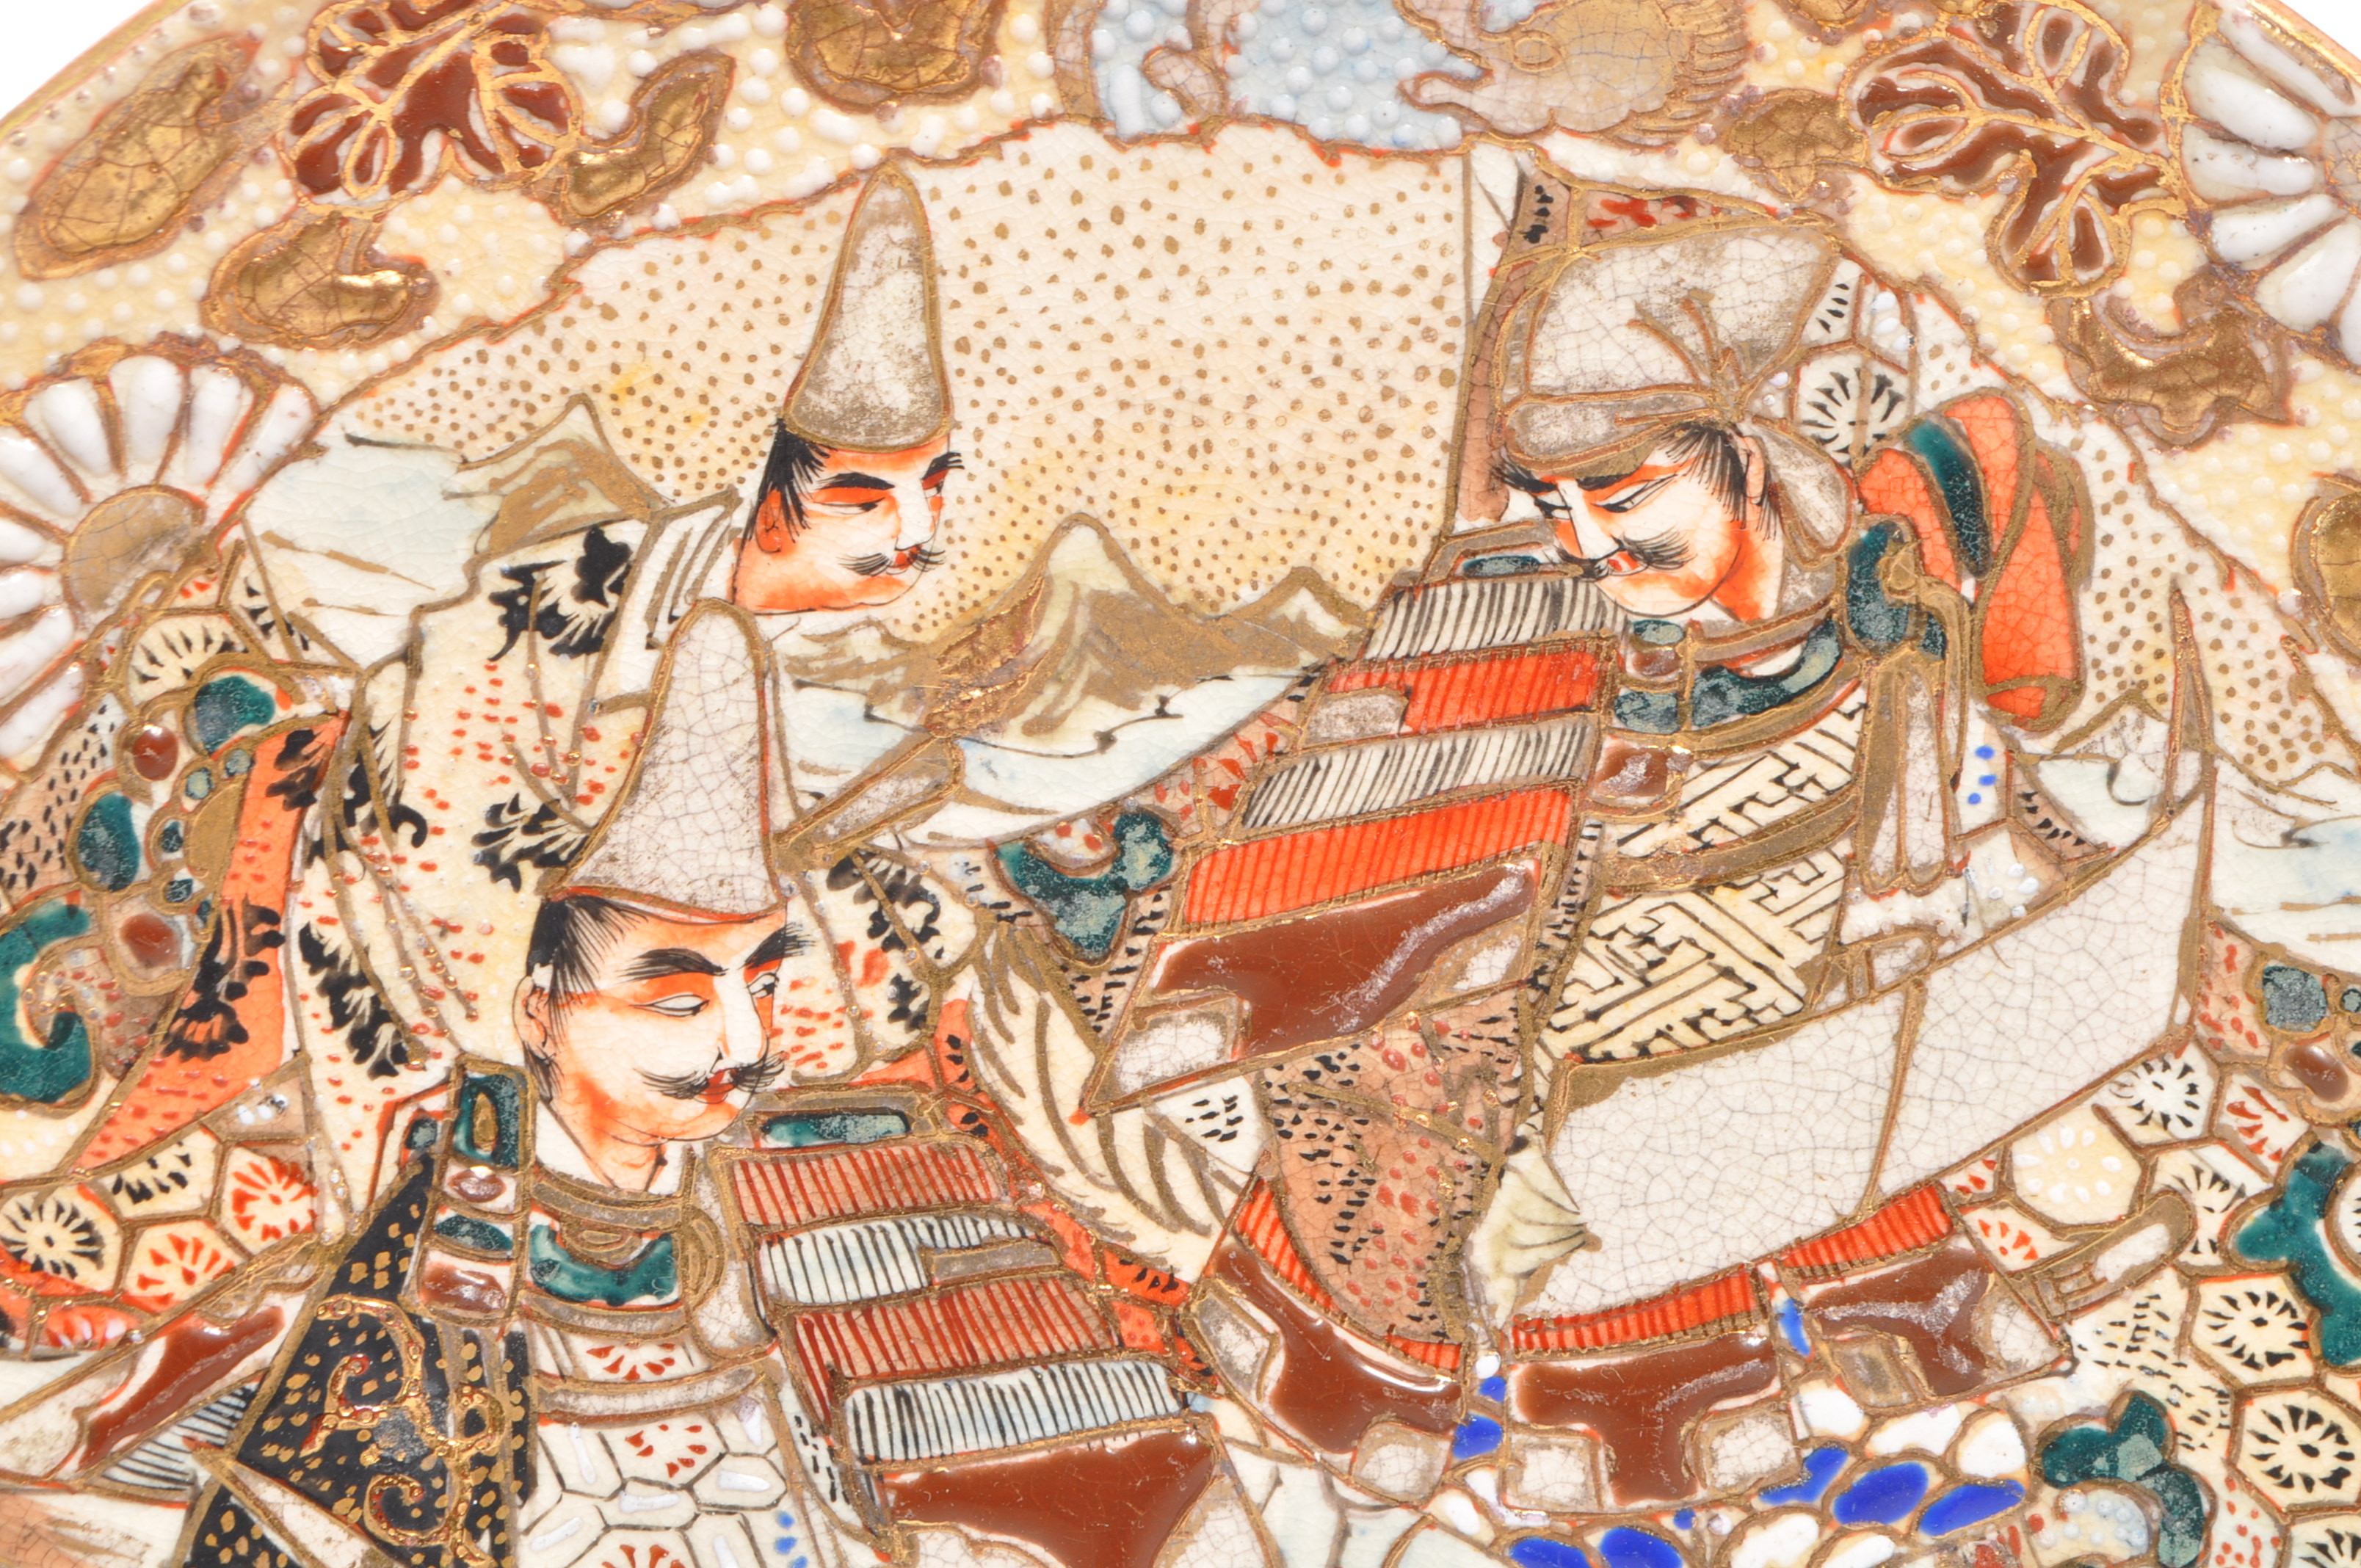 19TH CENTURY JAPANESE SATSUMA WARE CERAMIC PLATES - Image 3 of 4